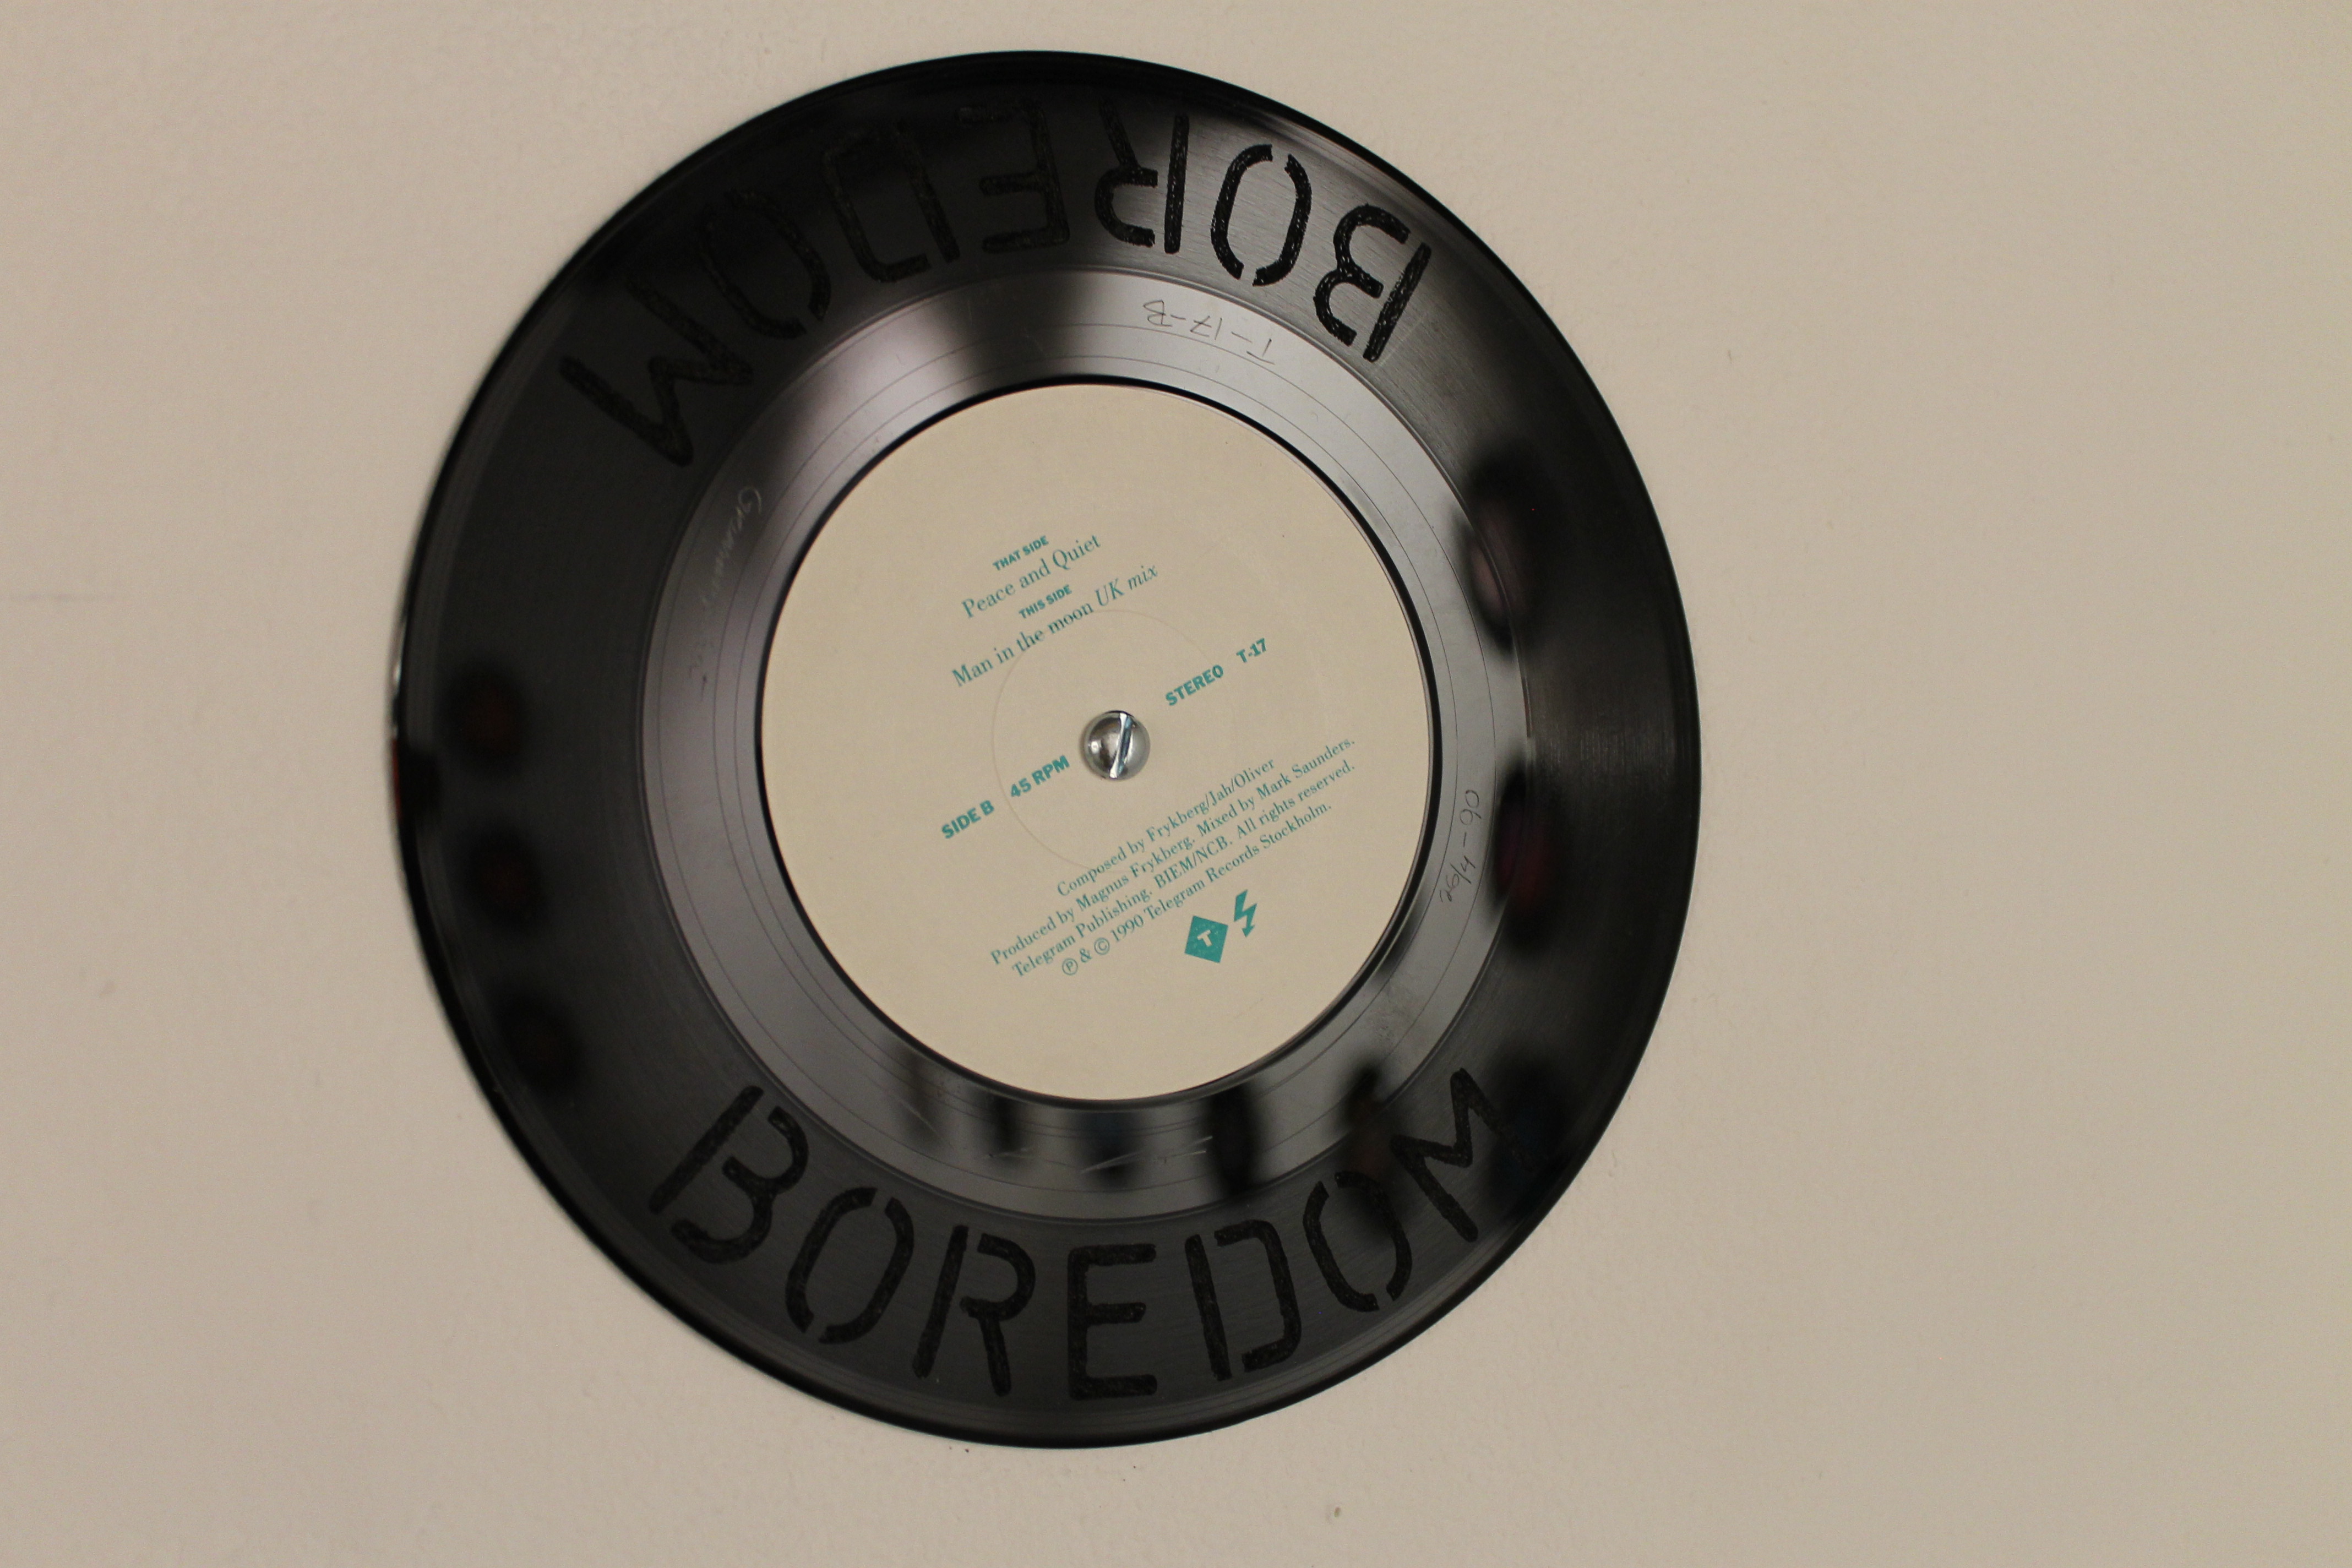 Hand engraved vinyl record